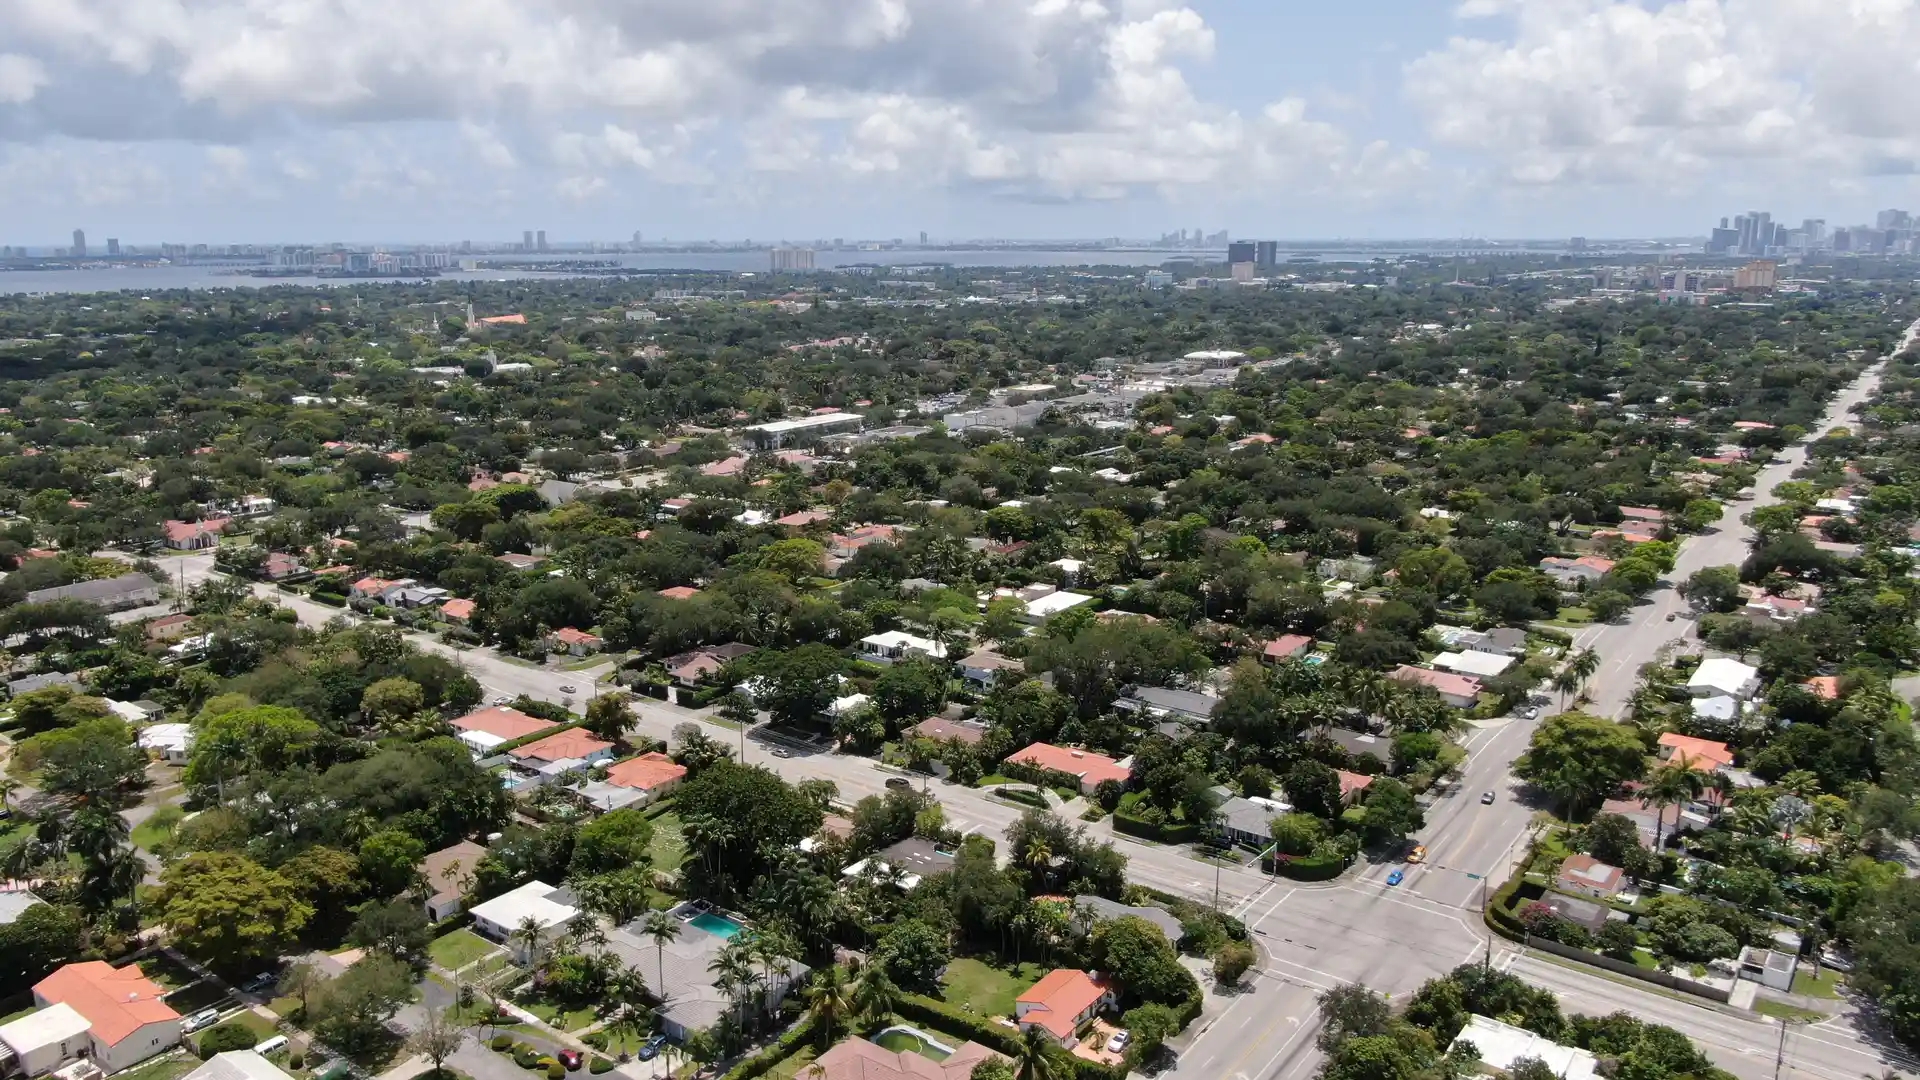 City of Miami - Zoning FL Zoning Code Ordinance